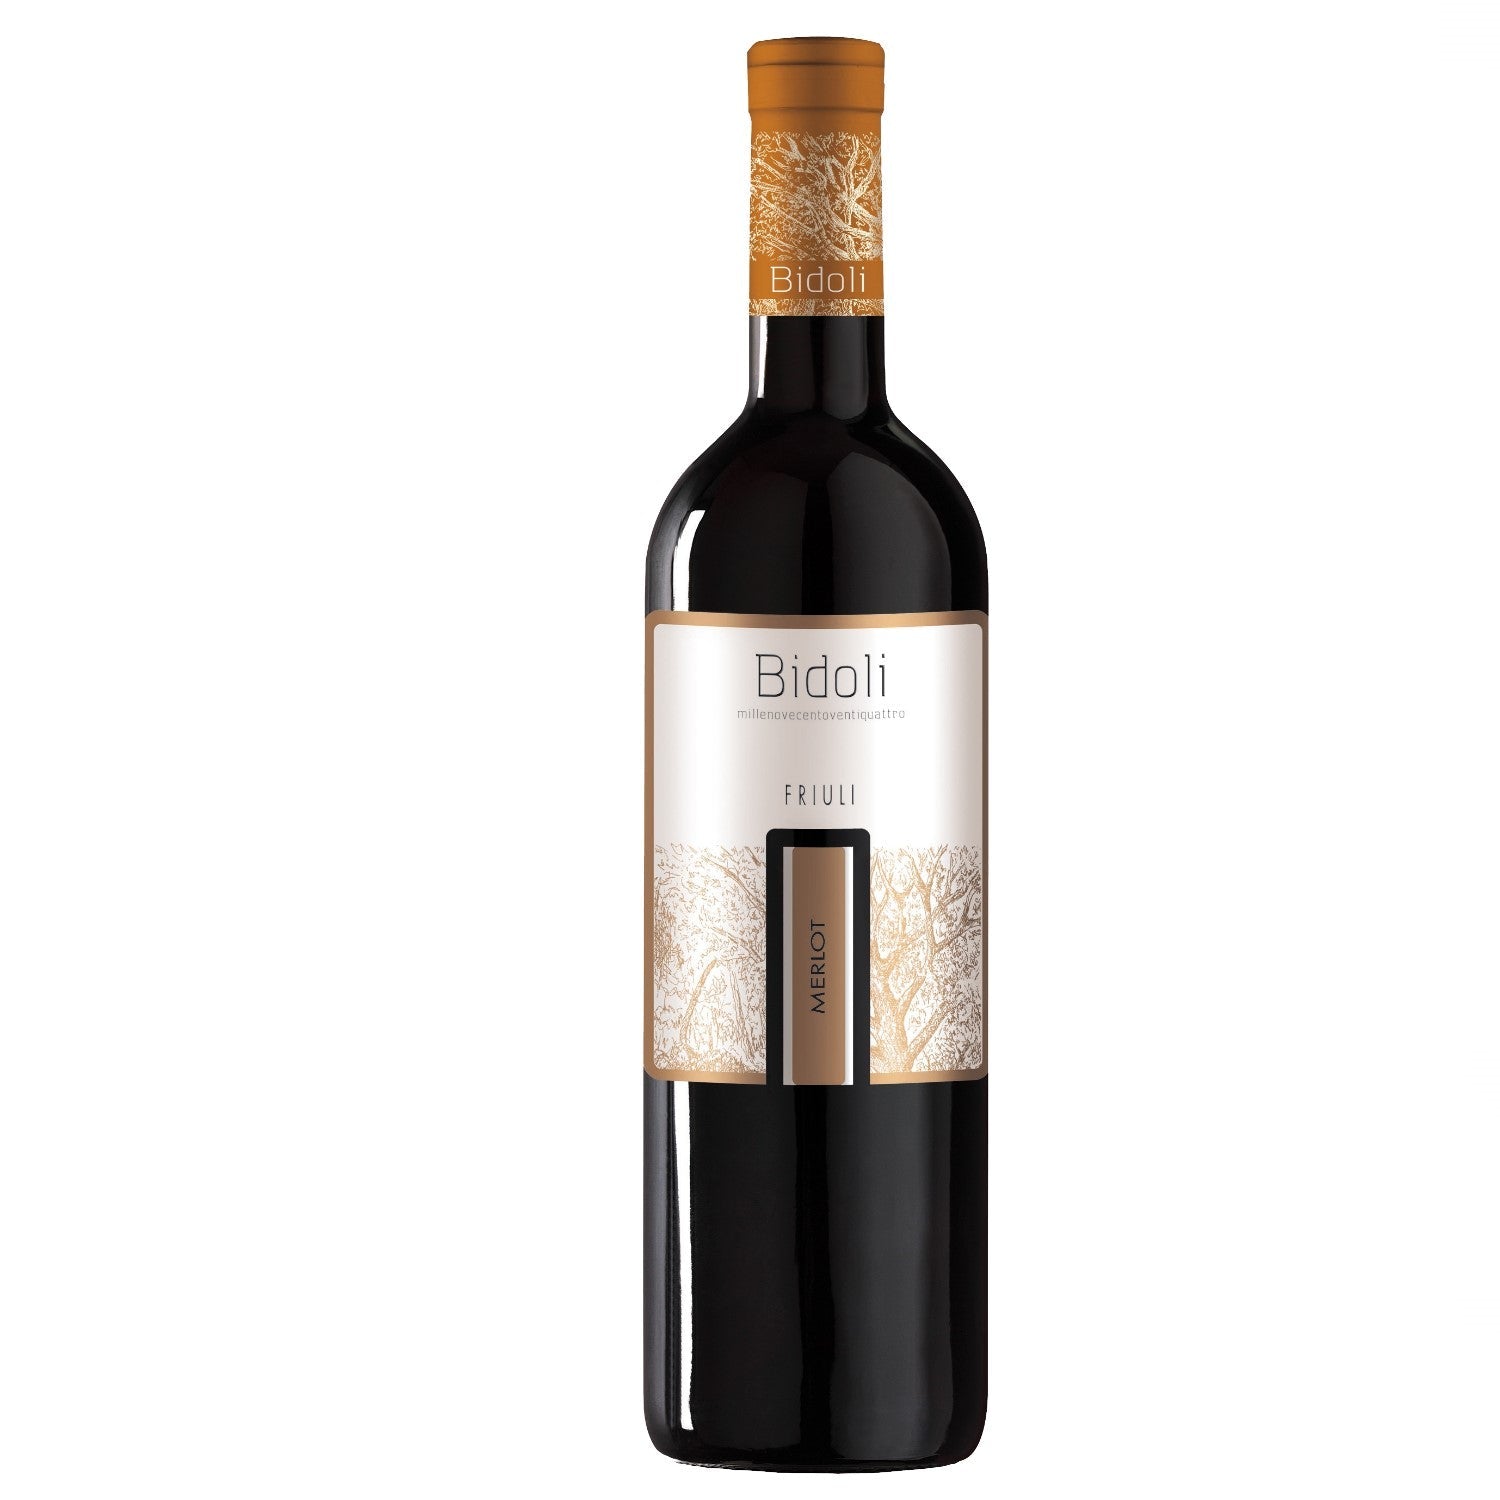 Bidoli Vini Merlot DOC Friuli Grave Rotwein Wein trocken Italien (3 x 0.75l) - Versanel -